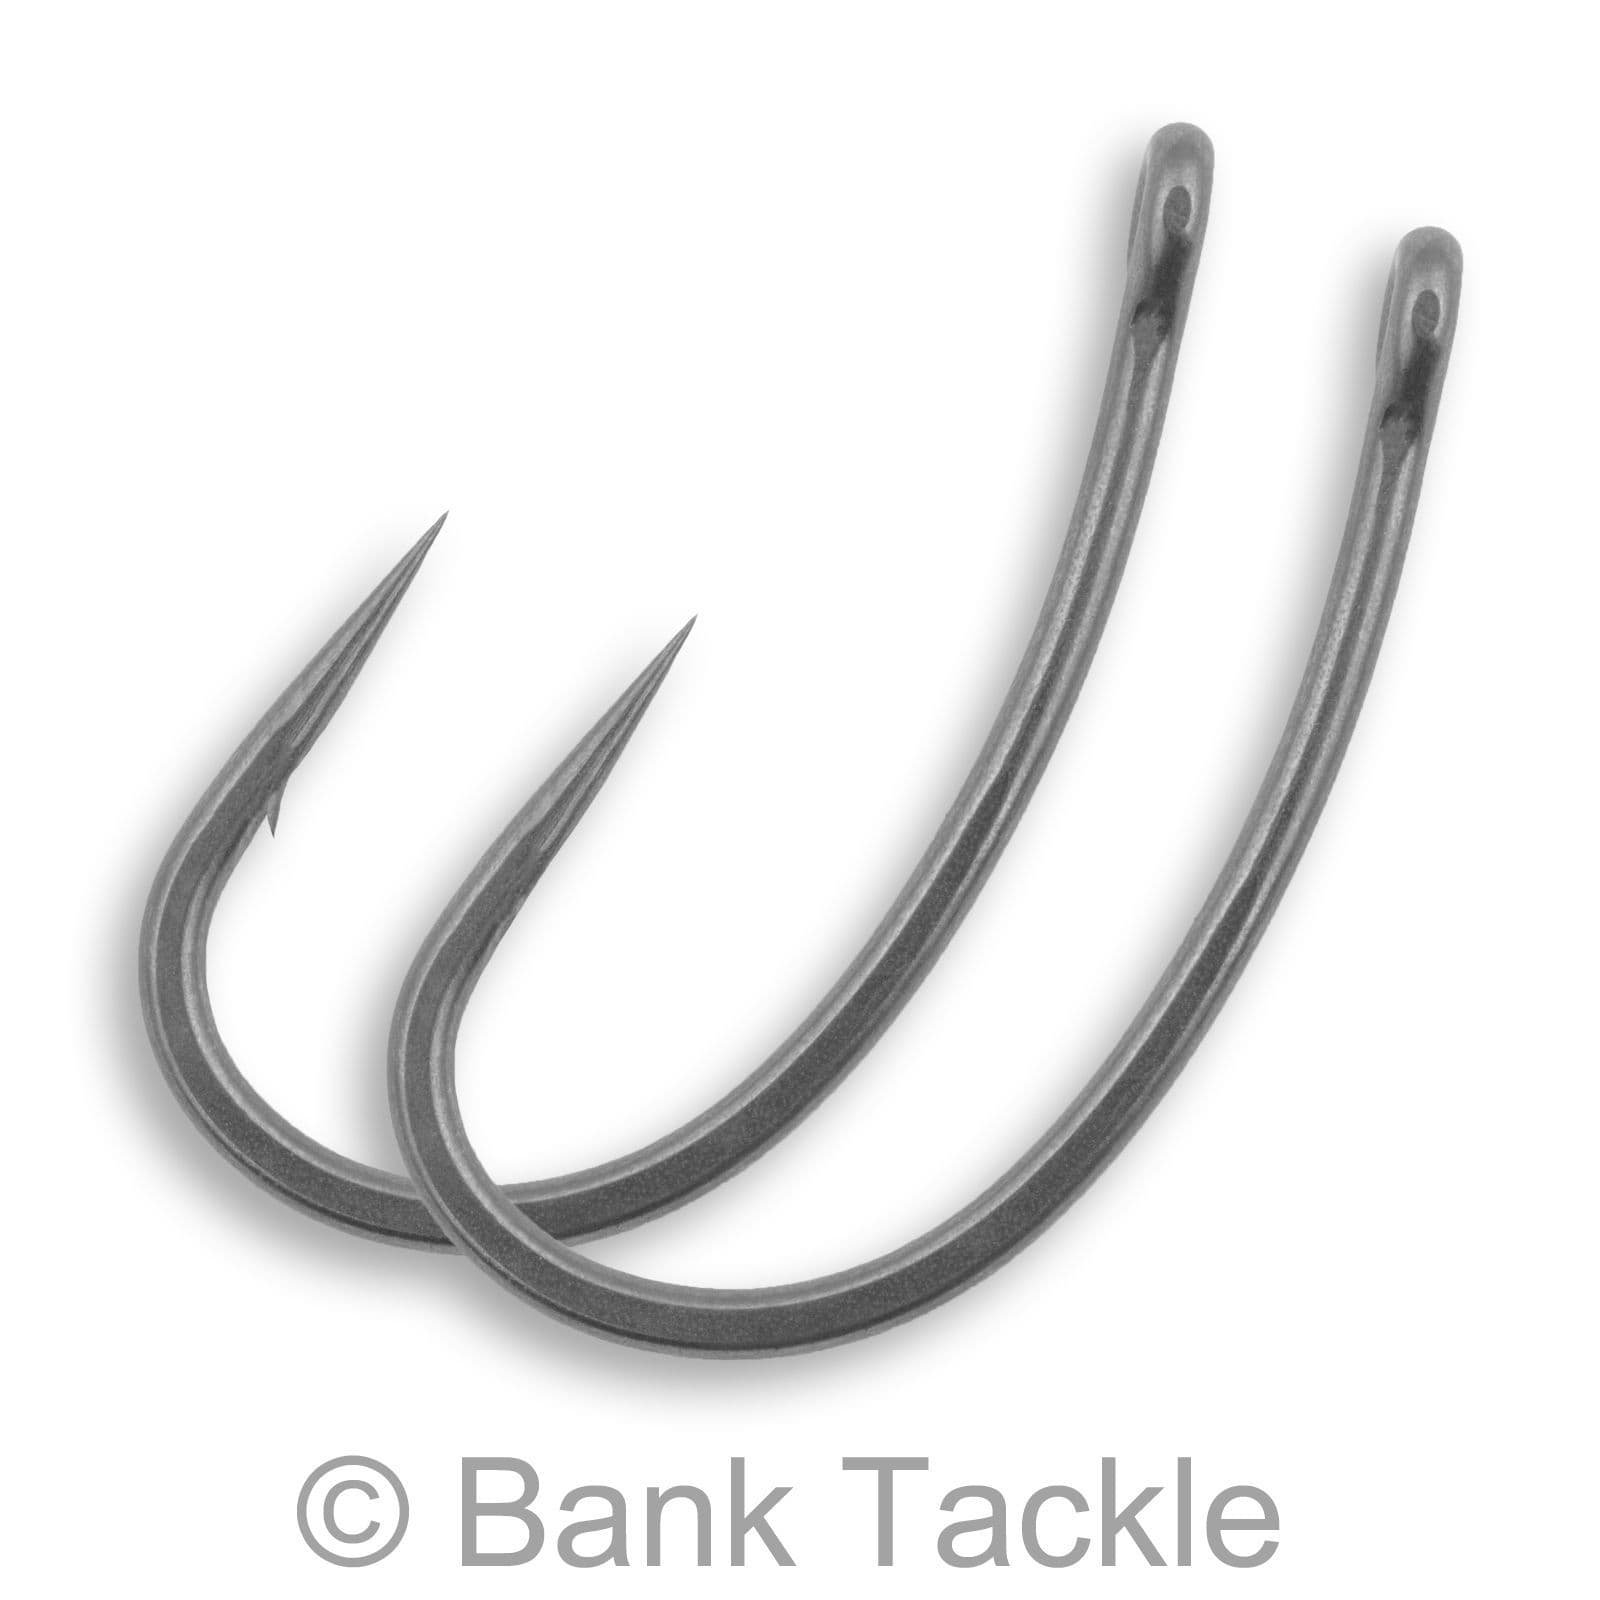 Bank Tackle new hook range  Barbel Fishing World Forums